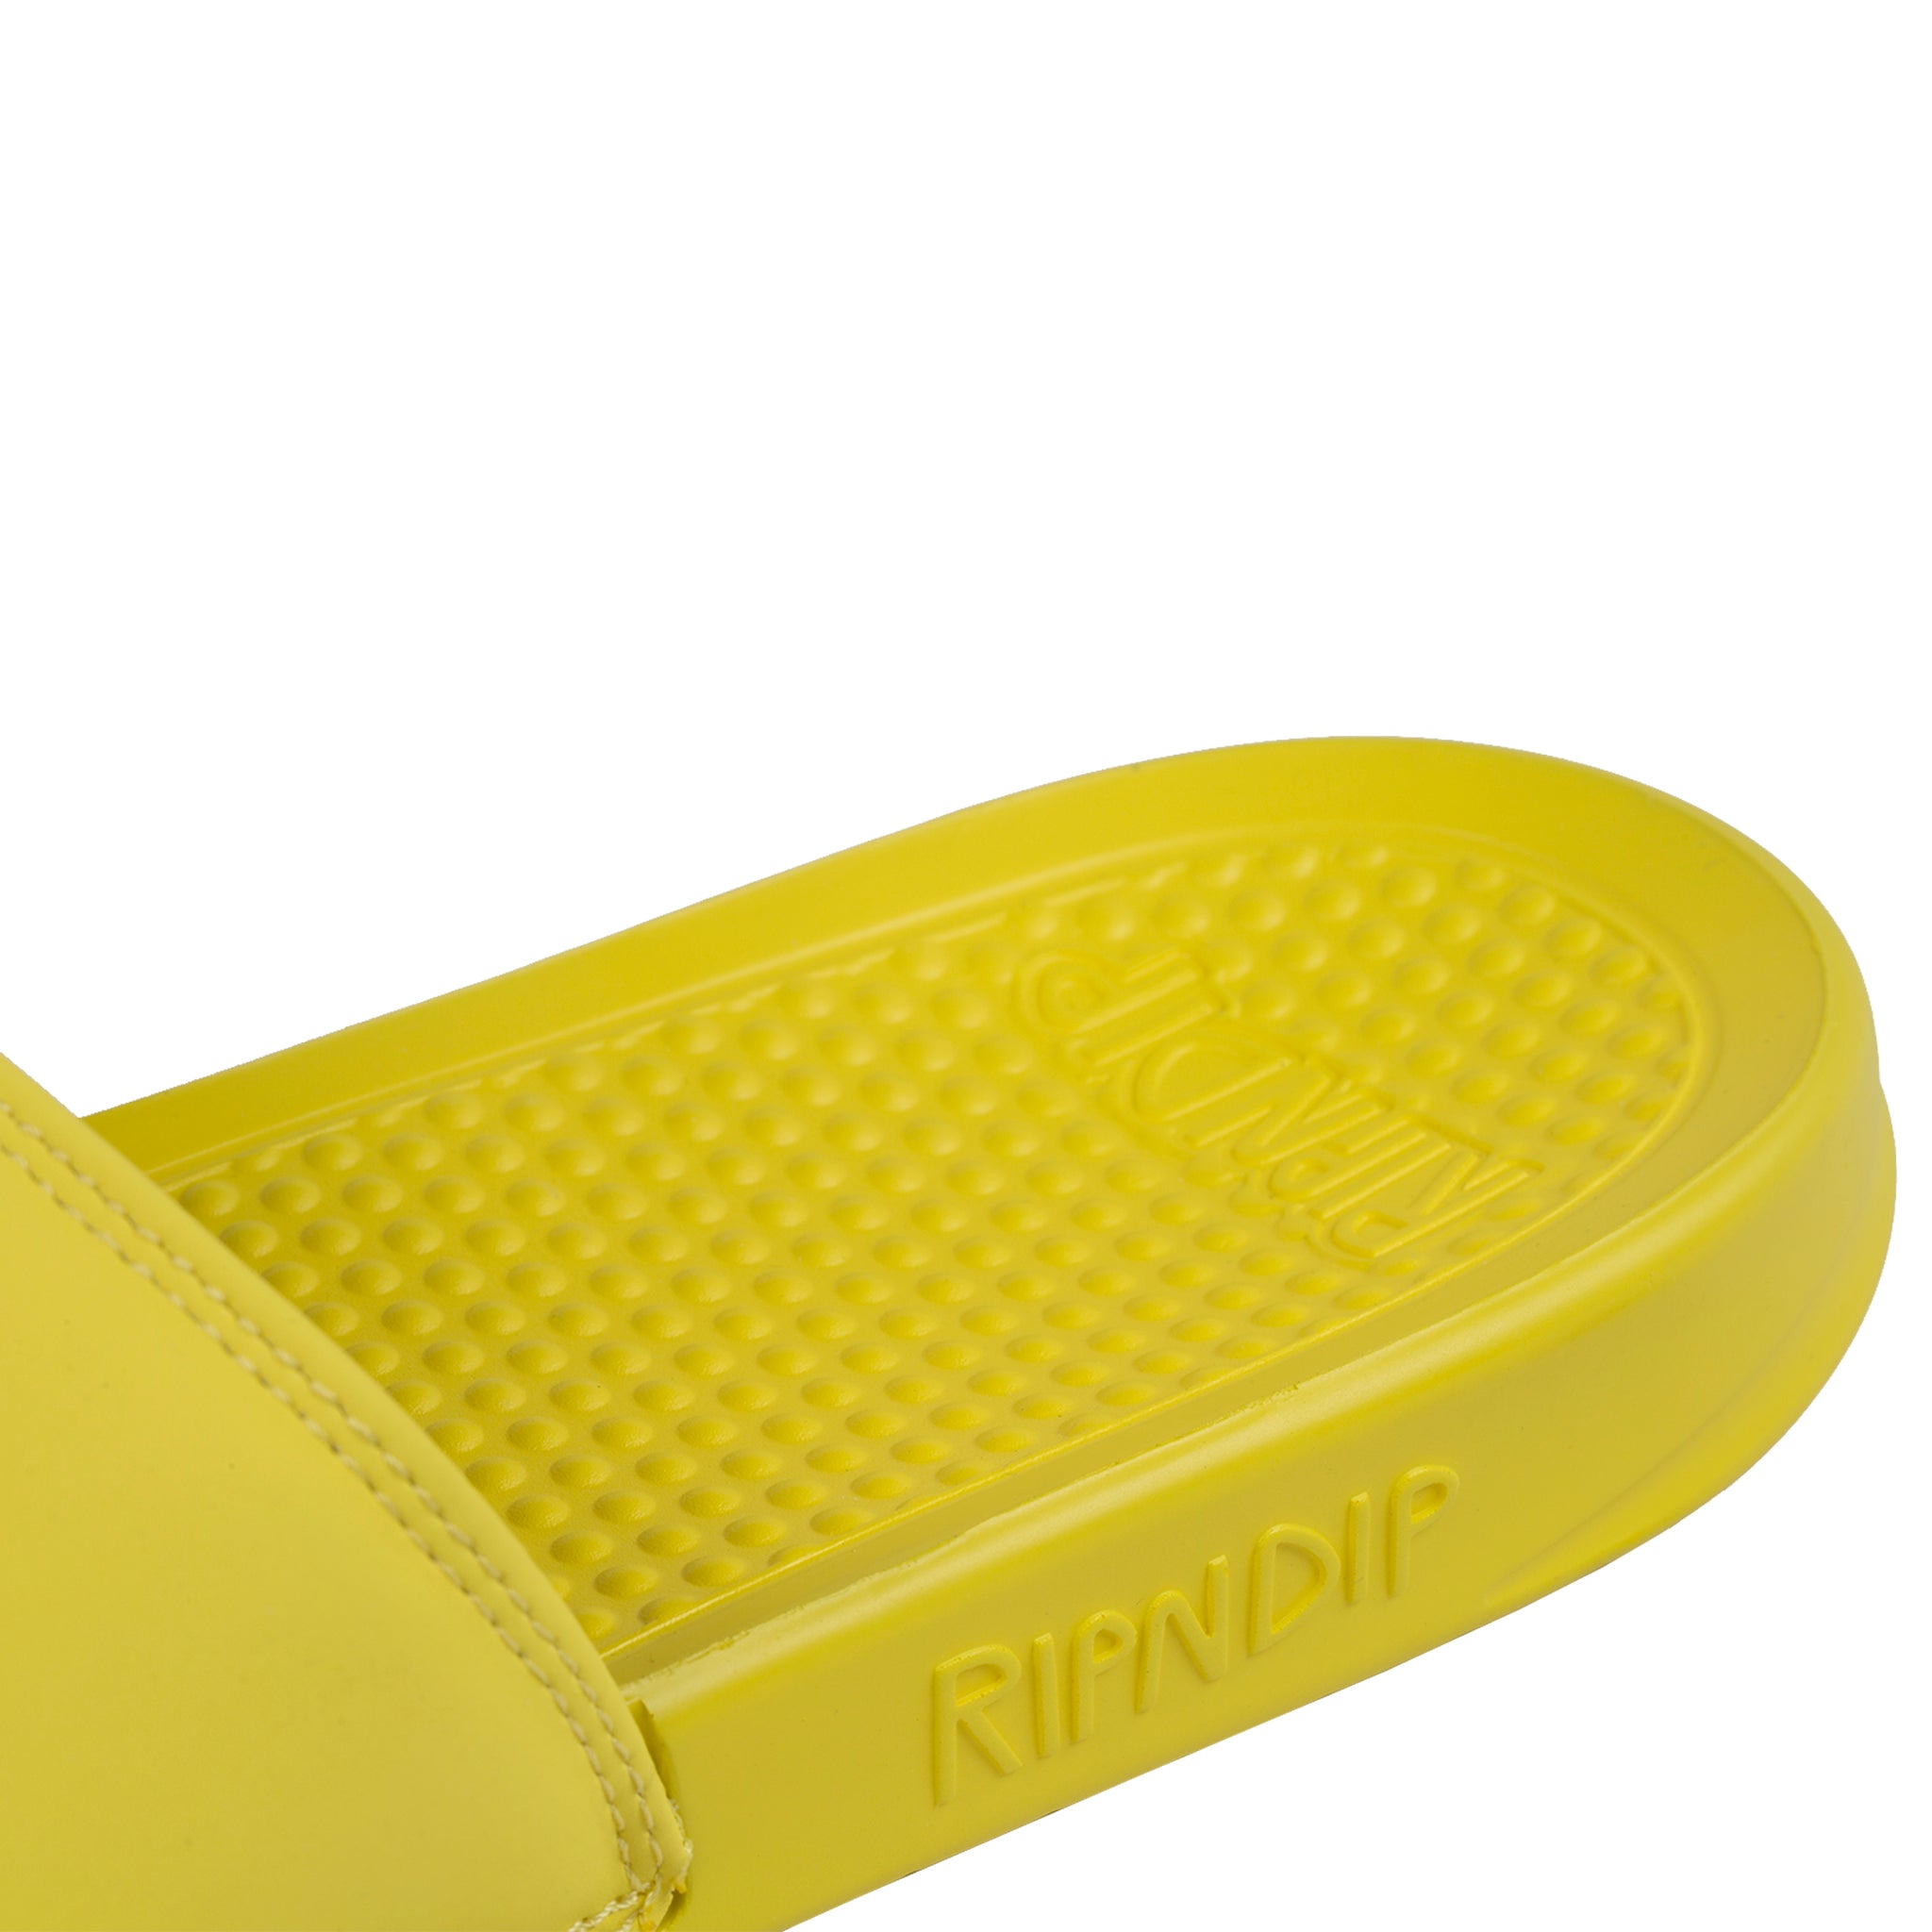 RipNDip Lord Nermal Slides (Yellow)